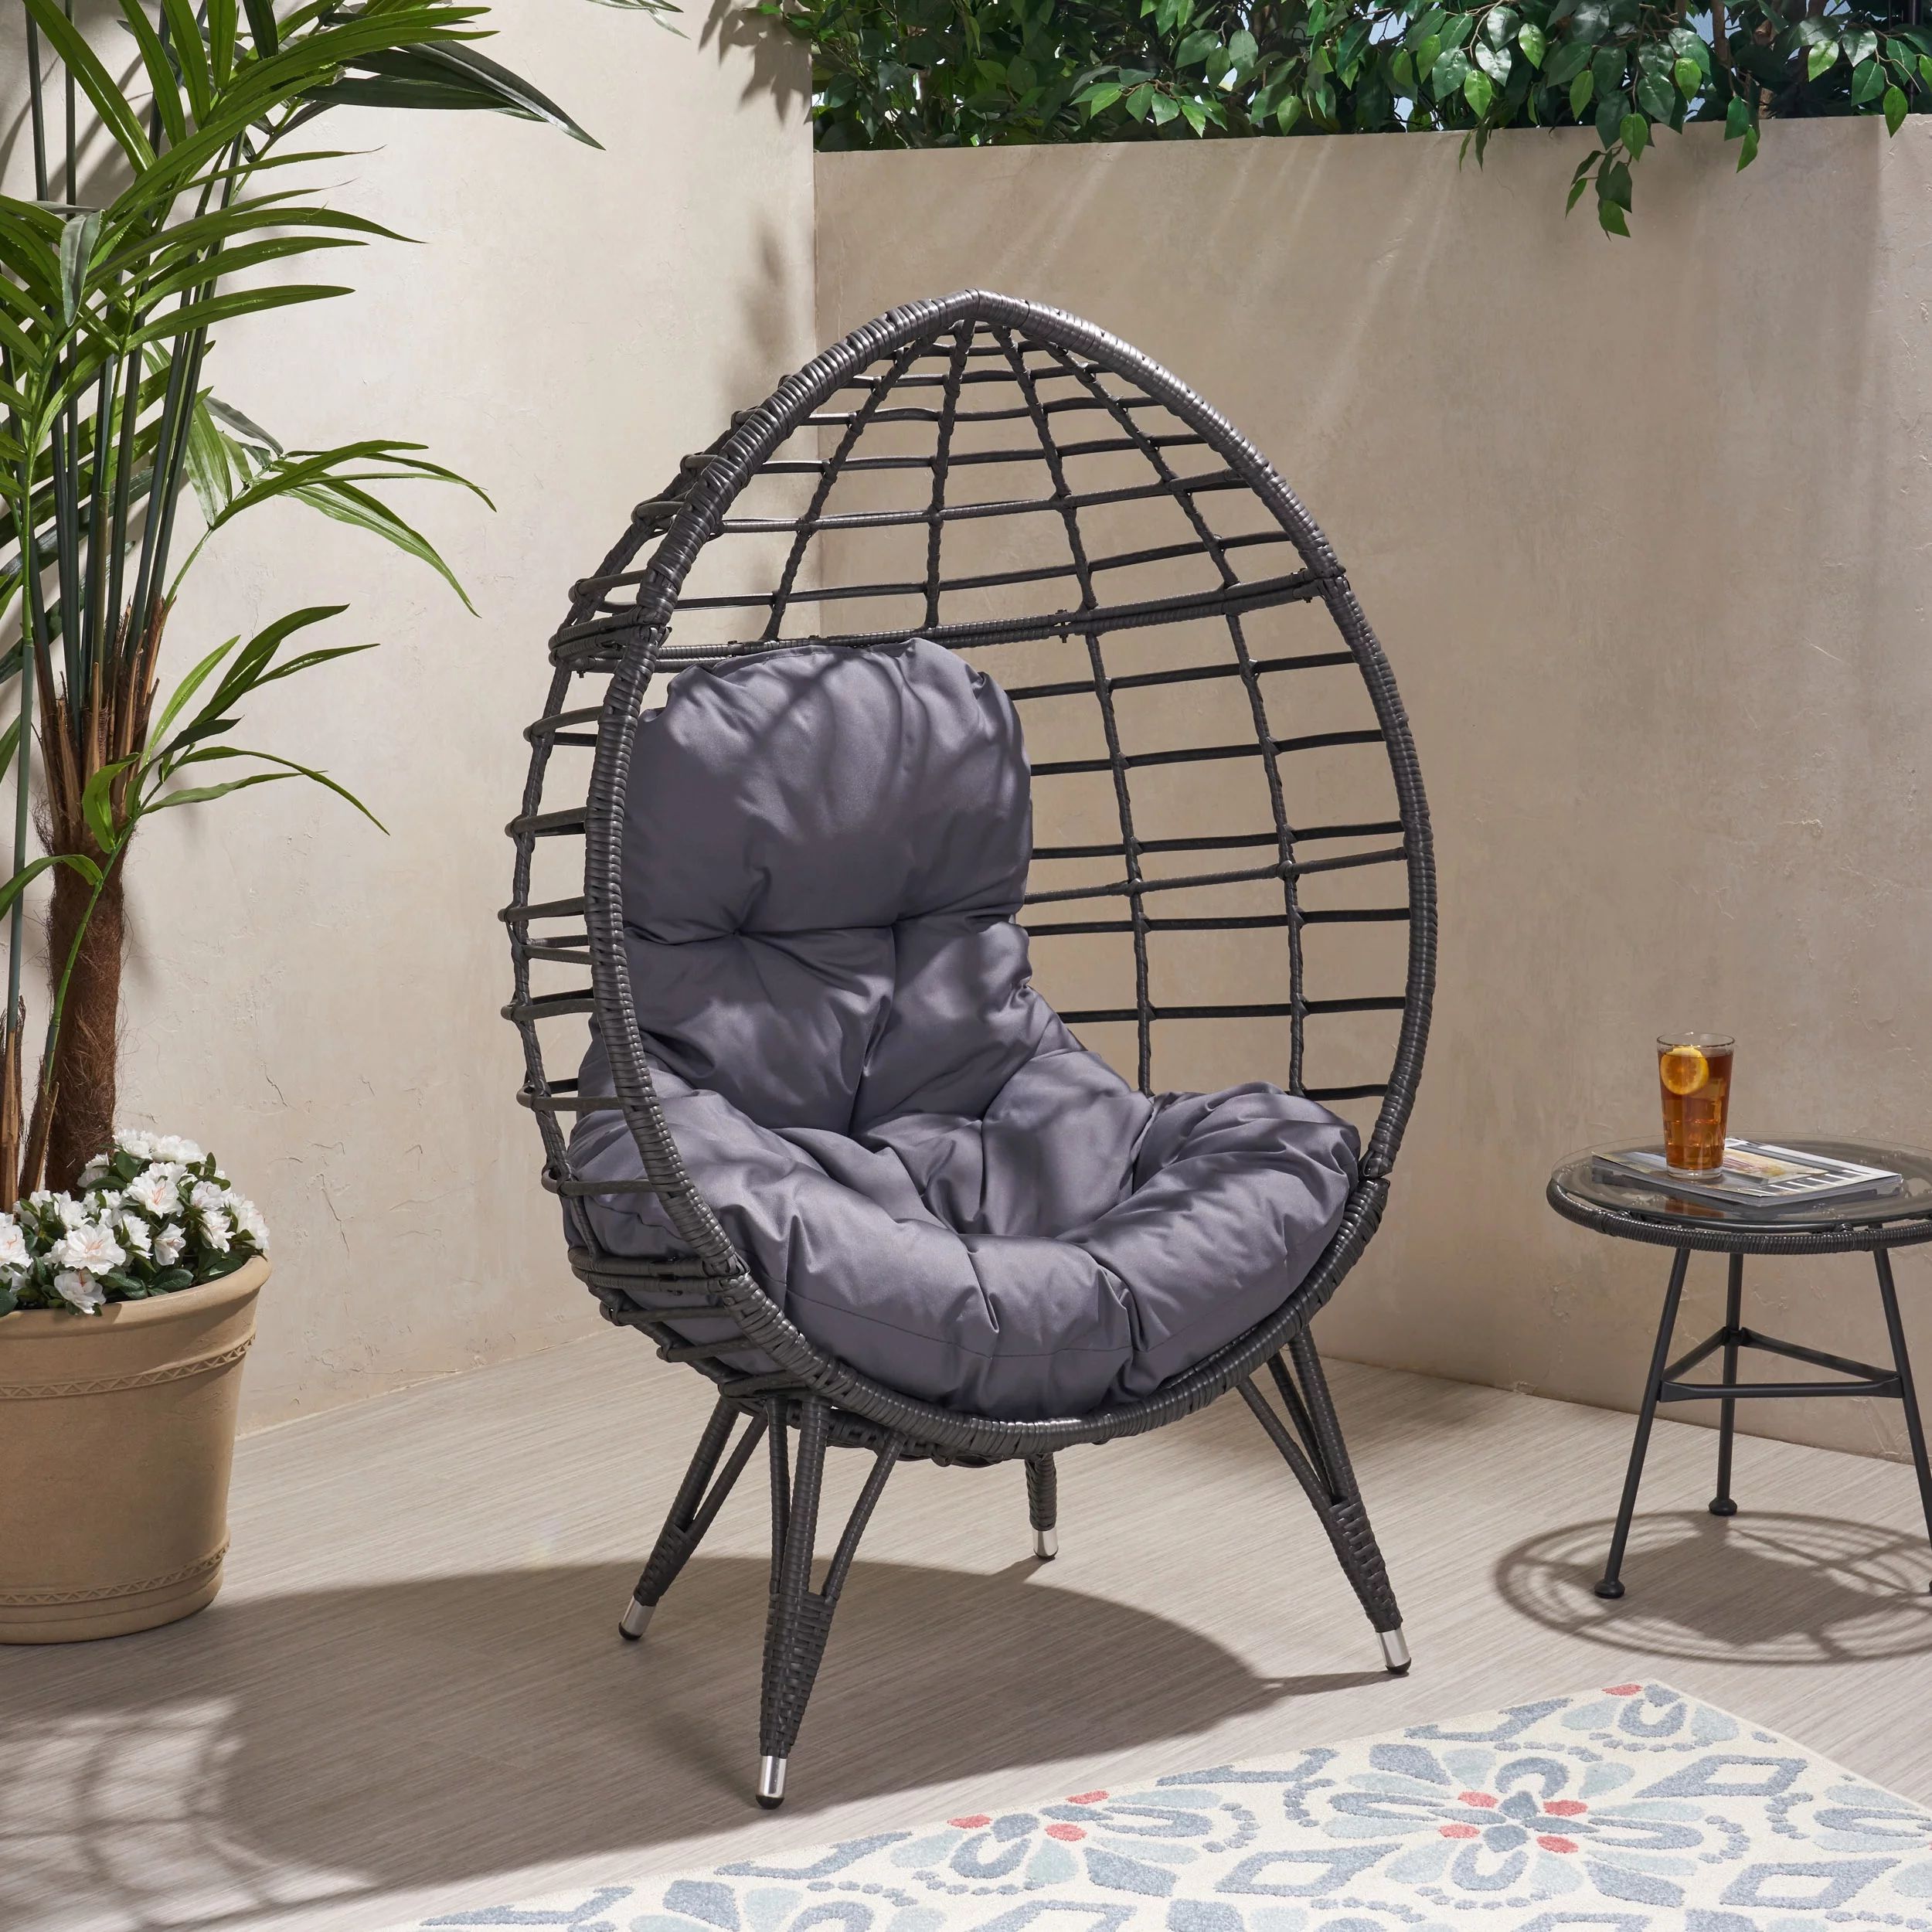 Kavani Outdoor Wicker Teardrop Chair with Cushion, Gray and Dark Gray | Walmart (US)